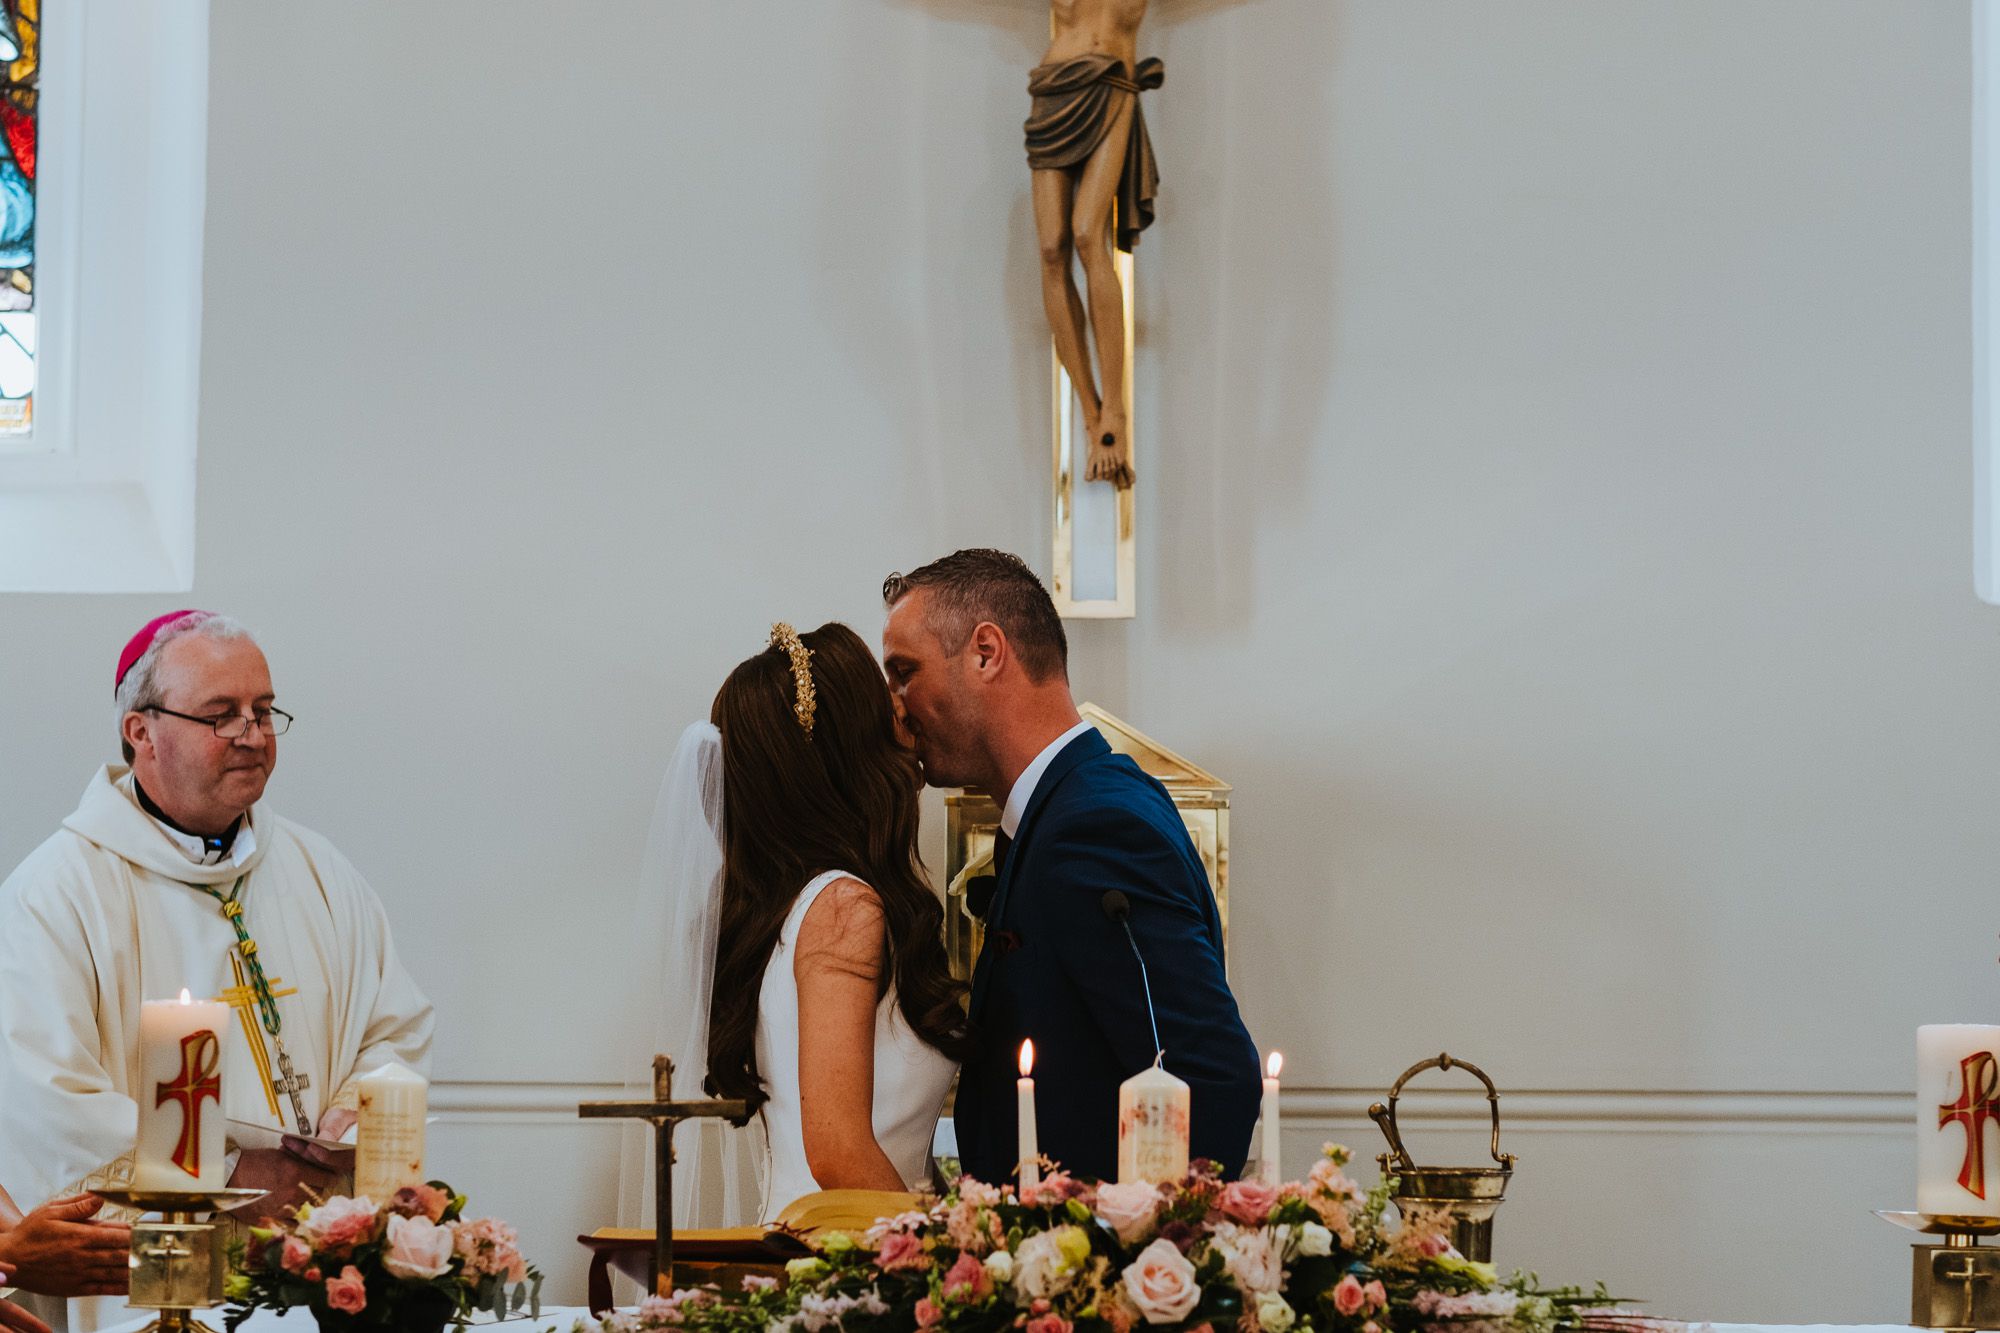 wedding-ardee-ireland-church-ceremony-bride-ideas